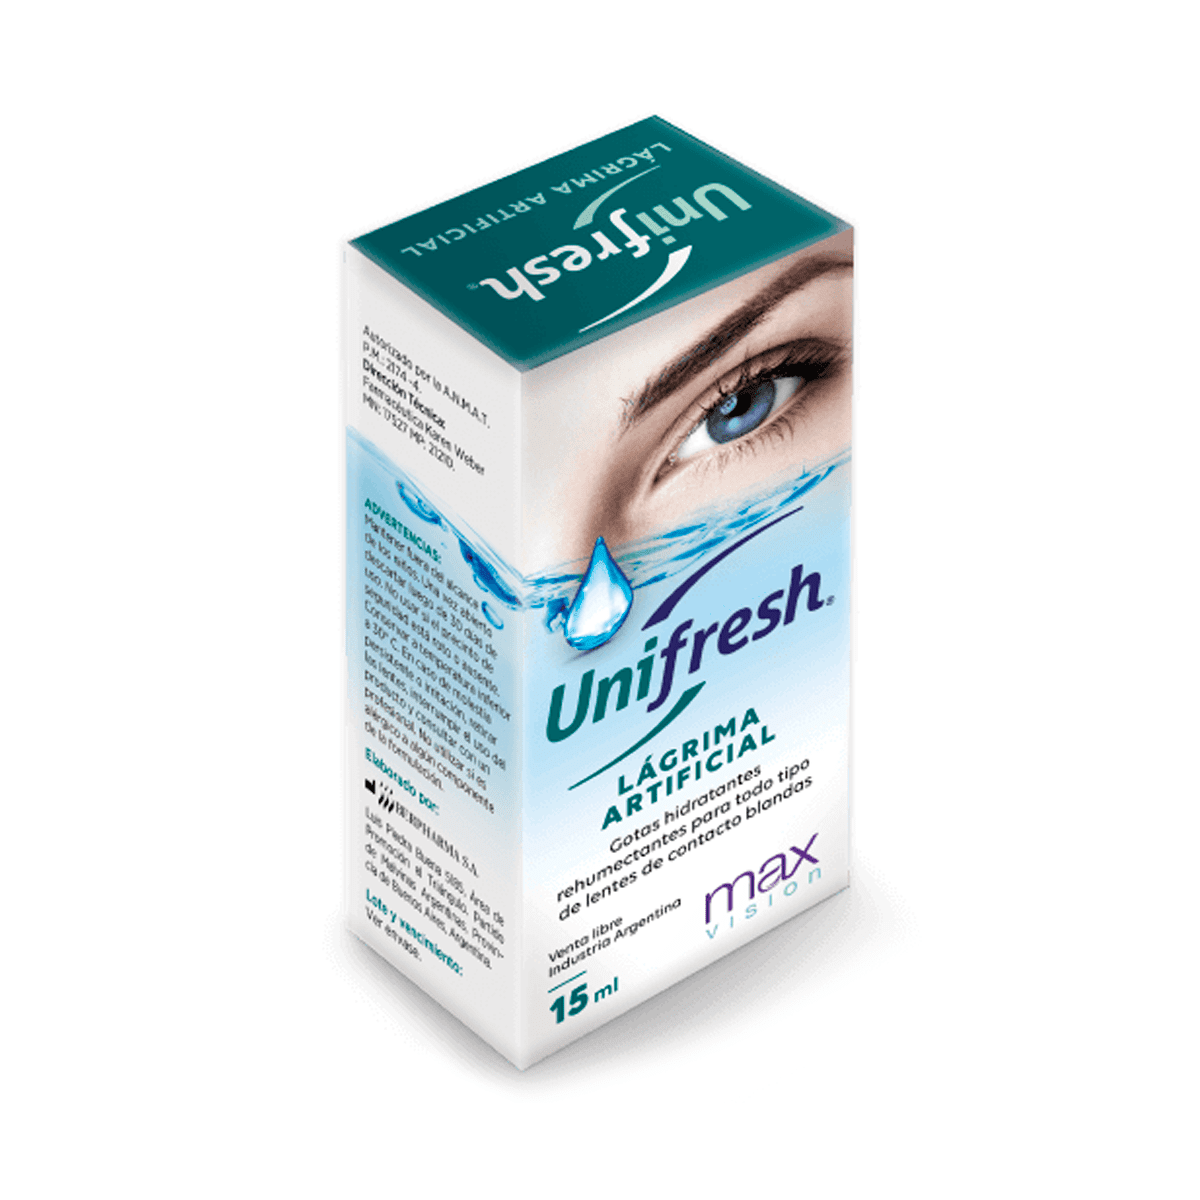 Unifresh Lagrima Arificial 15ml - Farmacia Zentner